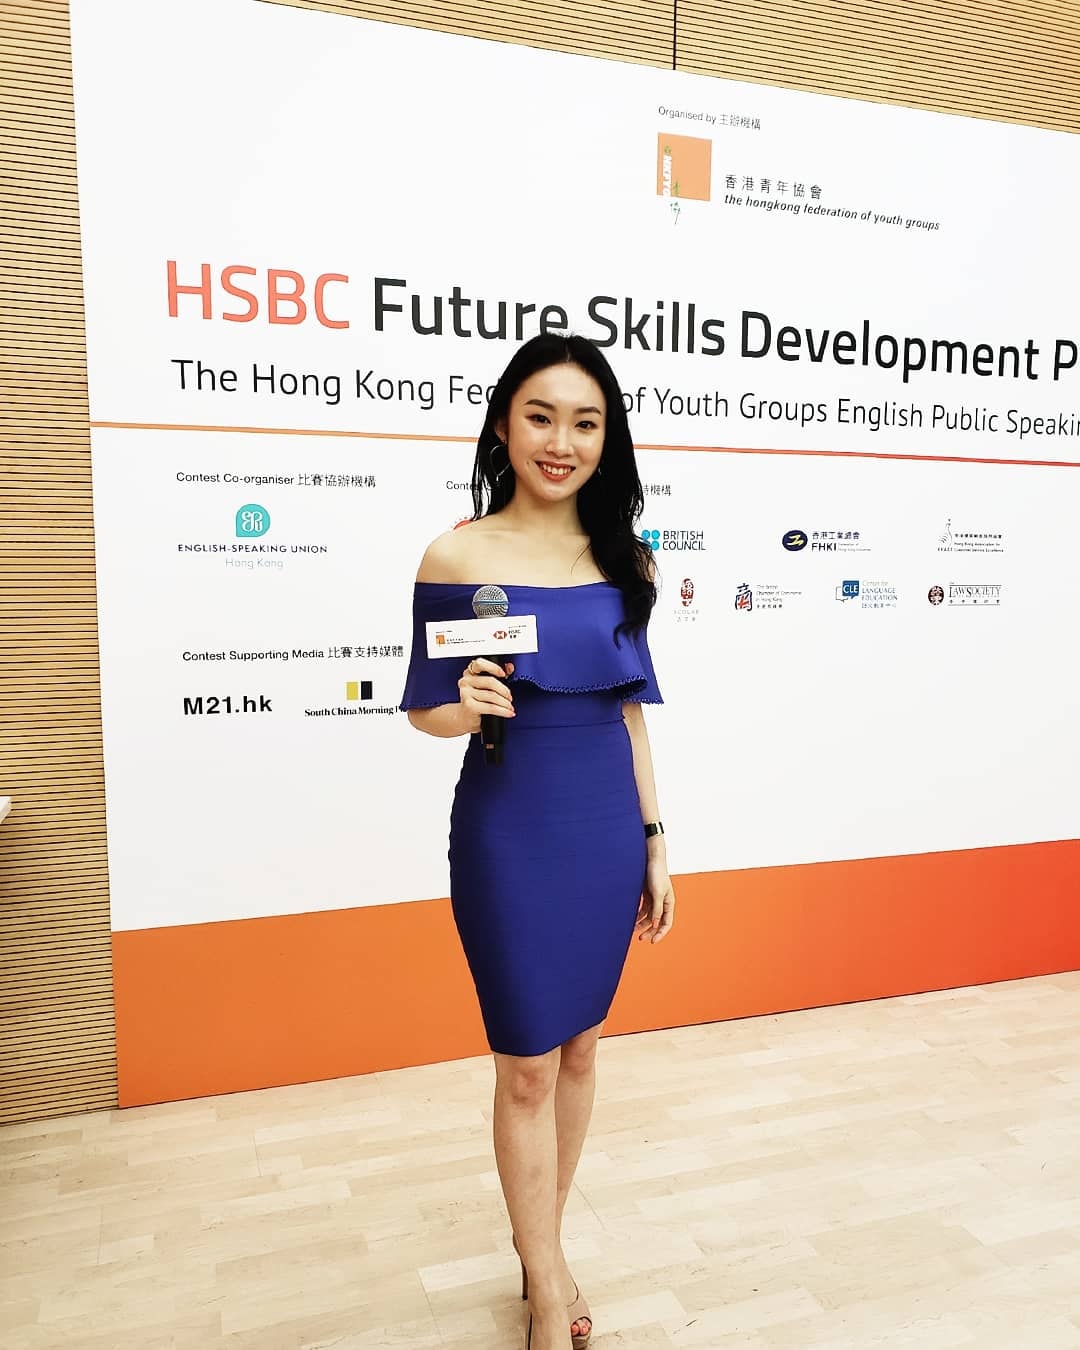 Annissa Choi司儀工作紀錄: 活動主持 | HSBC Future Skills Development Project and The HKFYG English Public Speaking Contest 2019